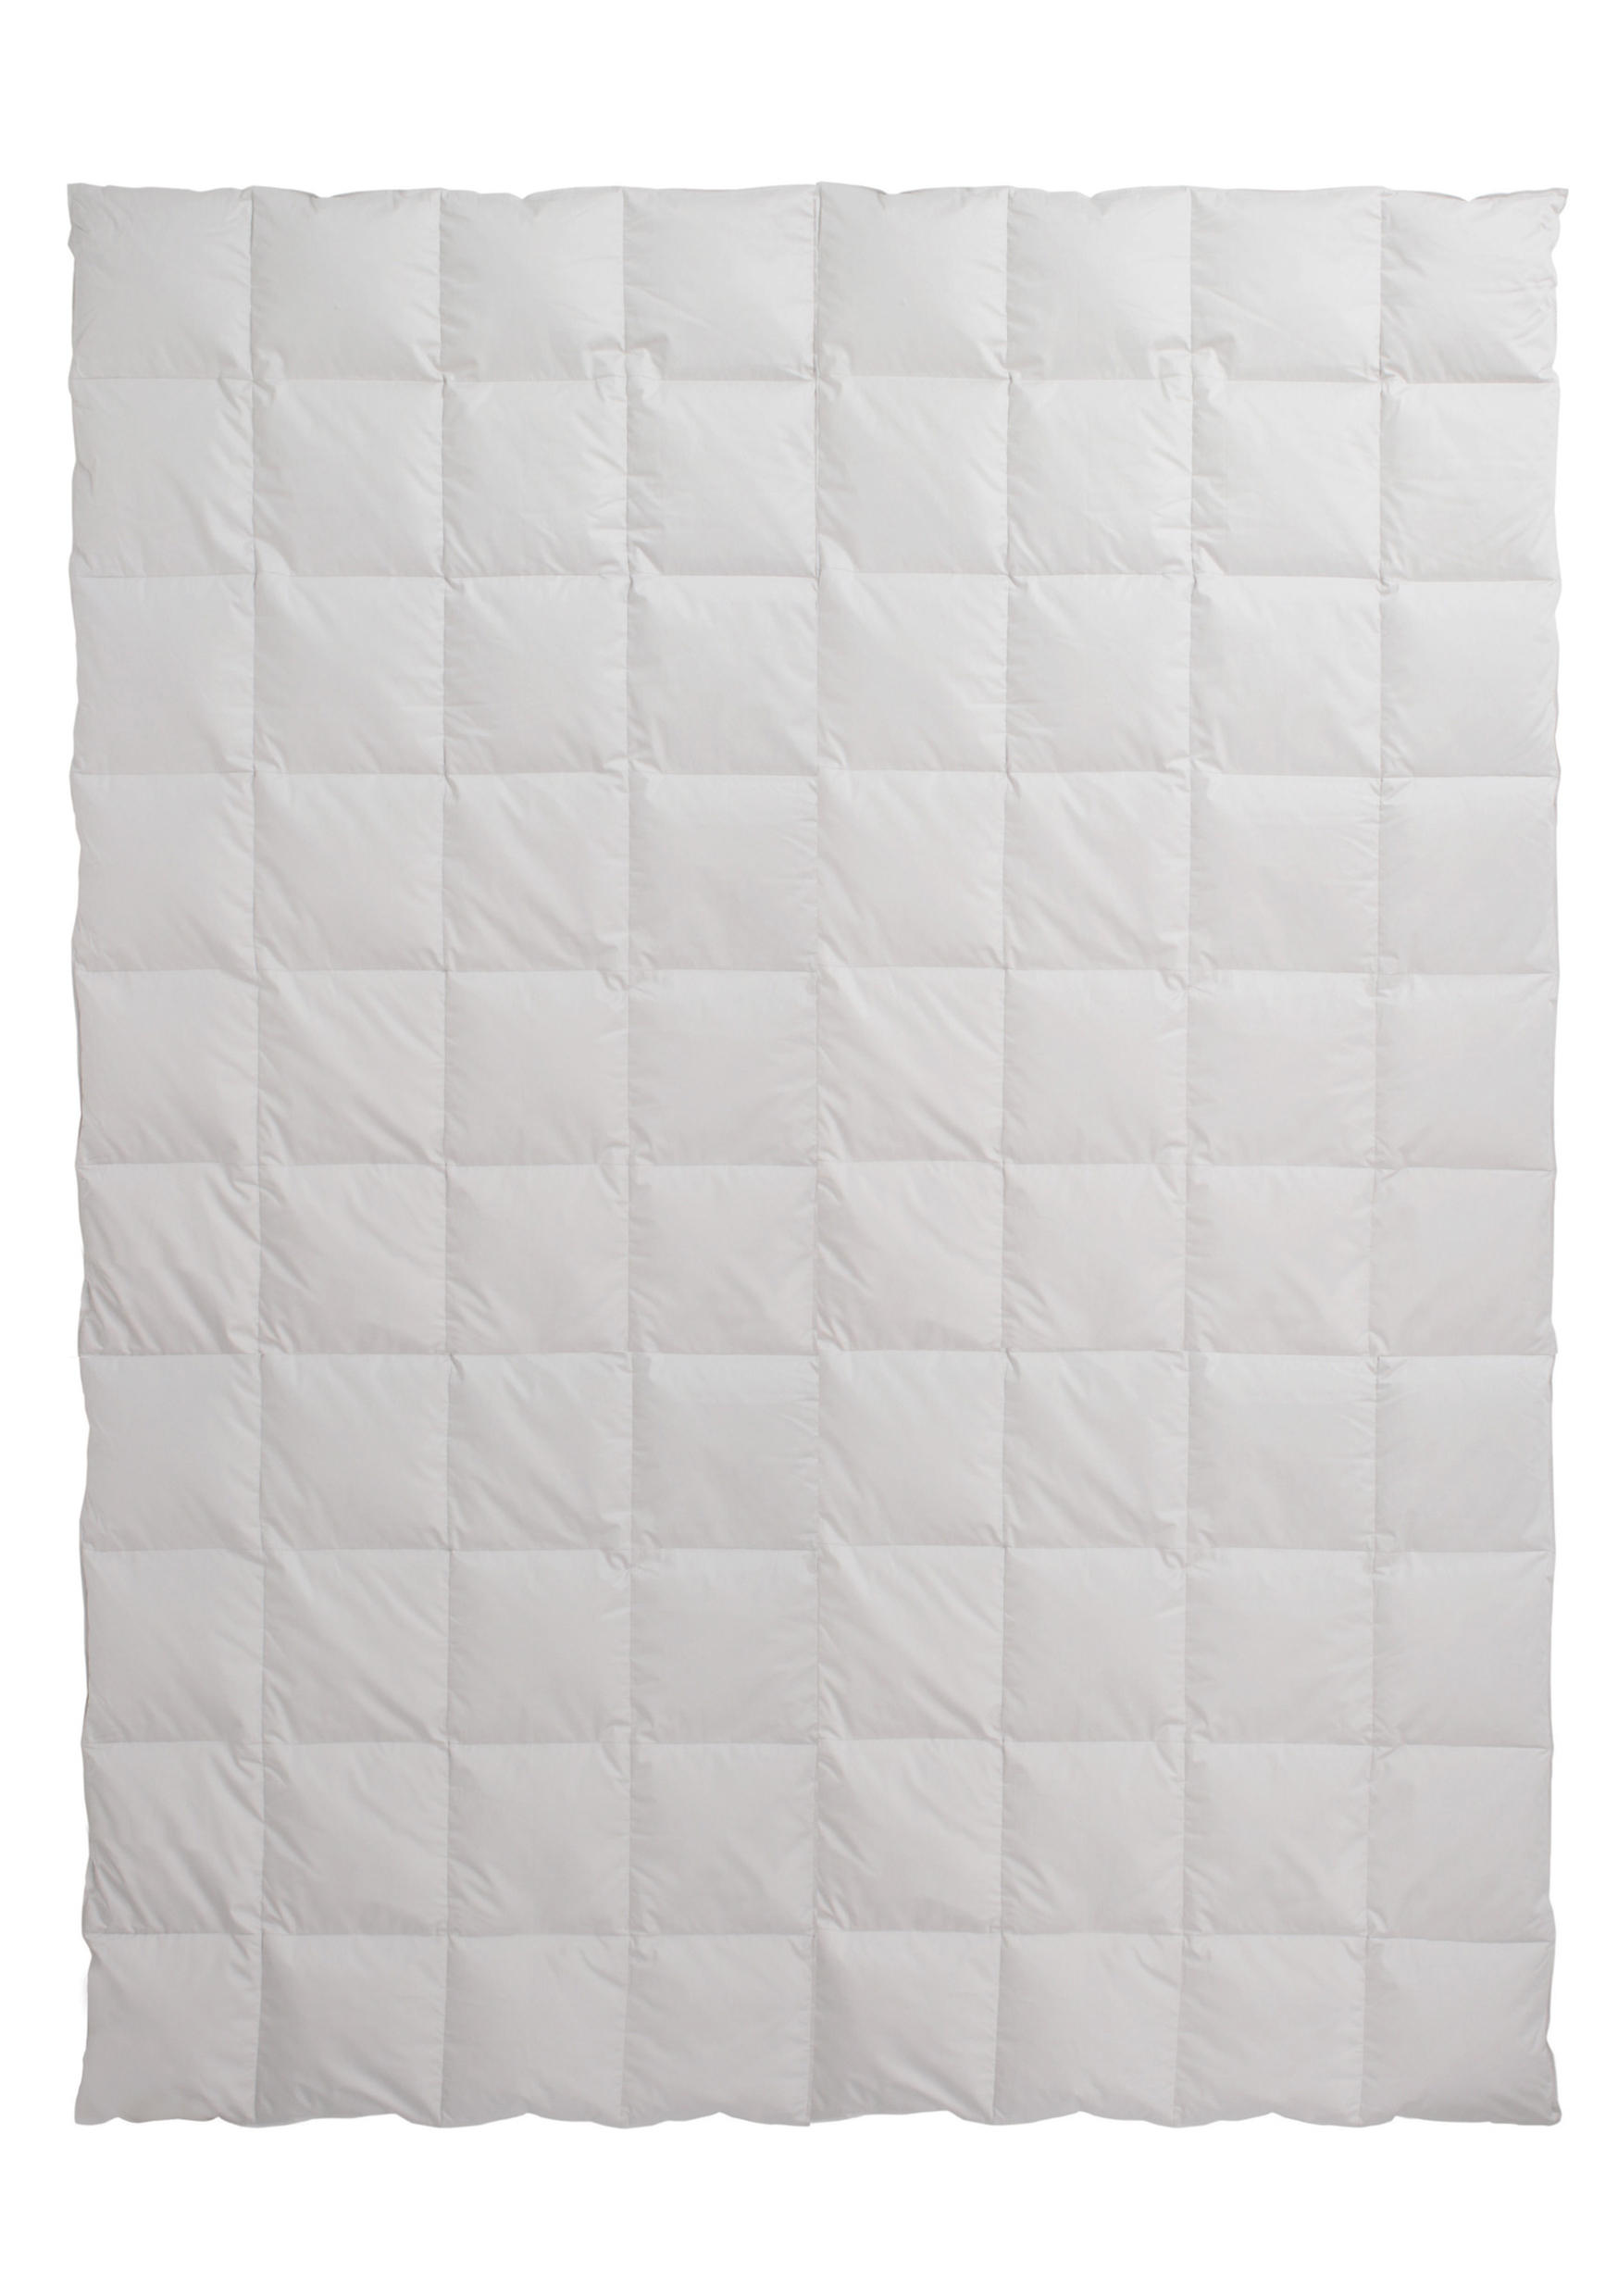 DAUNENDECKE  Ambiente  200/200 cm   - Weiß, Basics, Textil (200/200cm) - Centa-Star